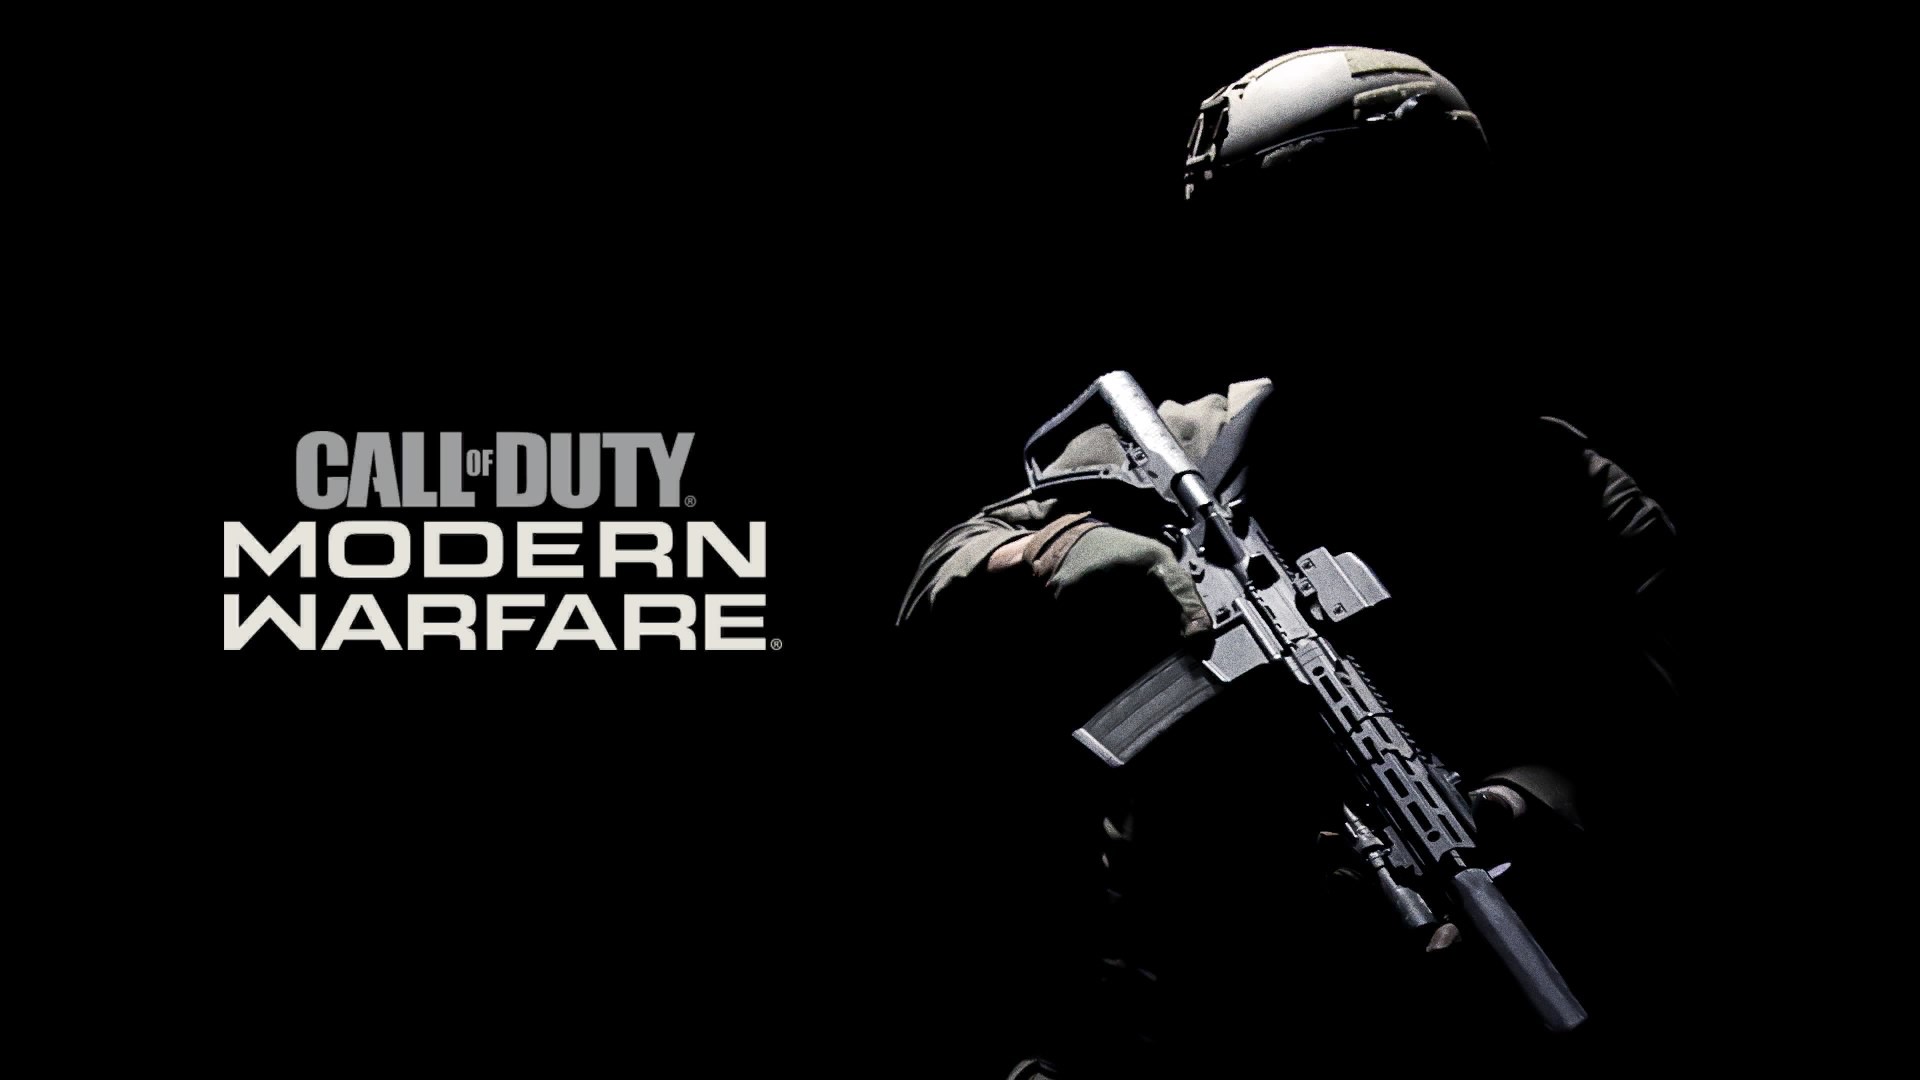 HD Wallpaper For Theme Call Of Duty Modern Warfare